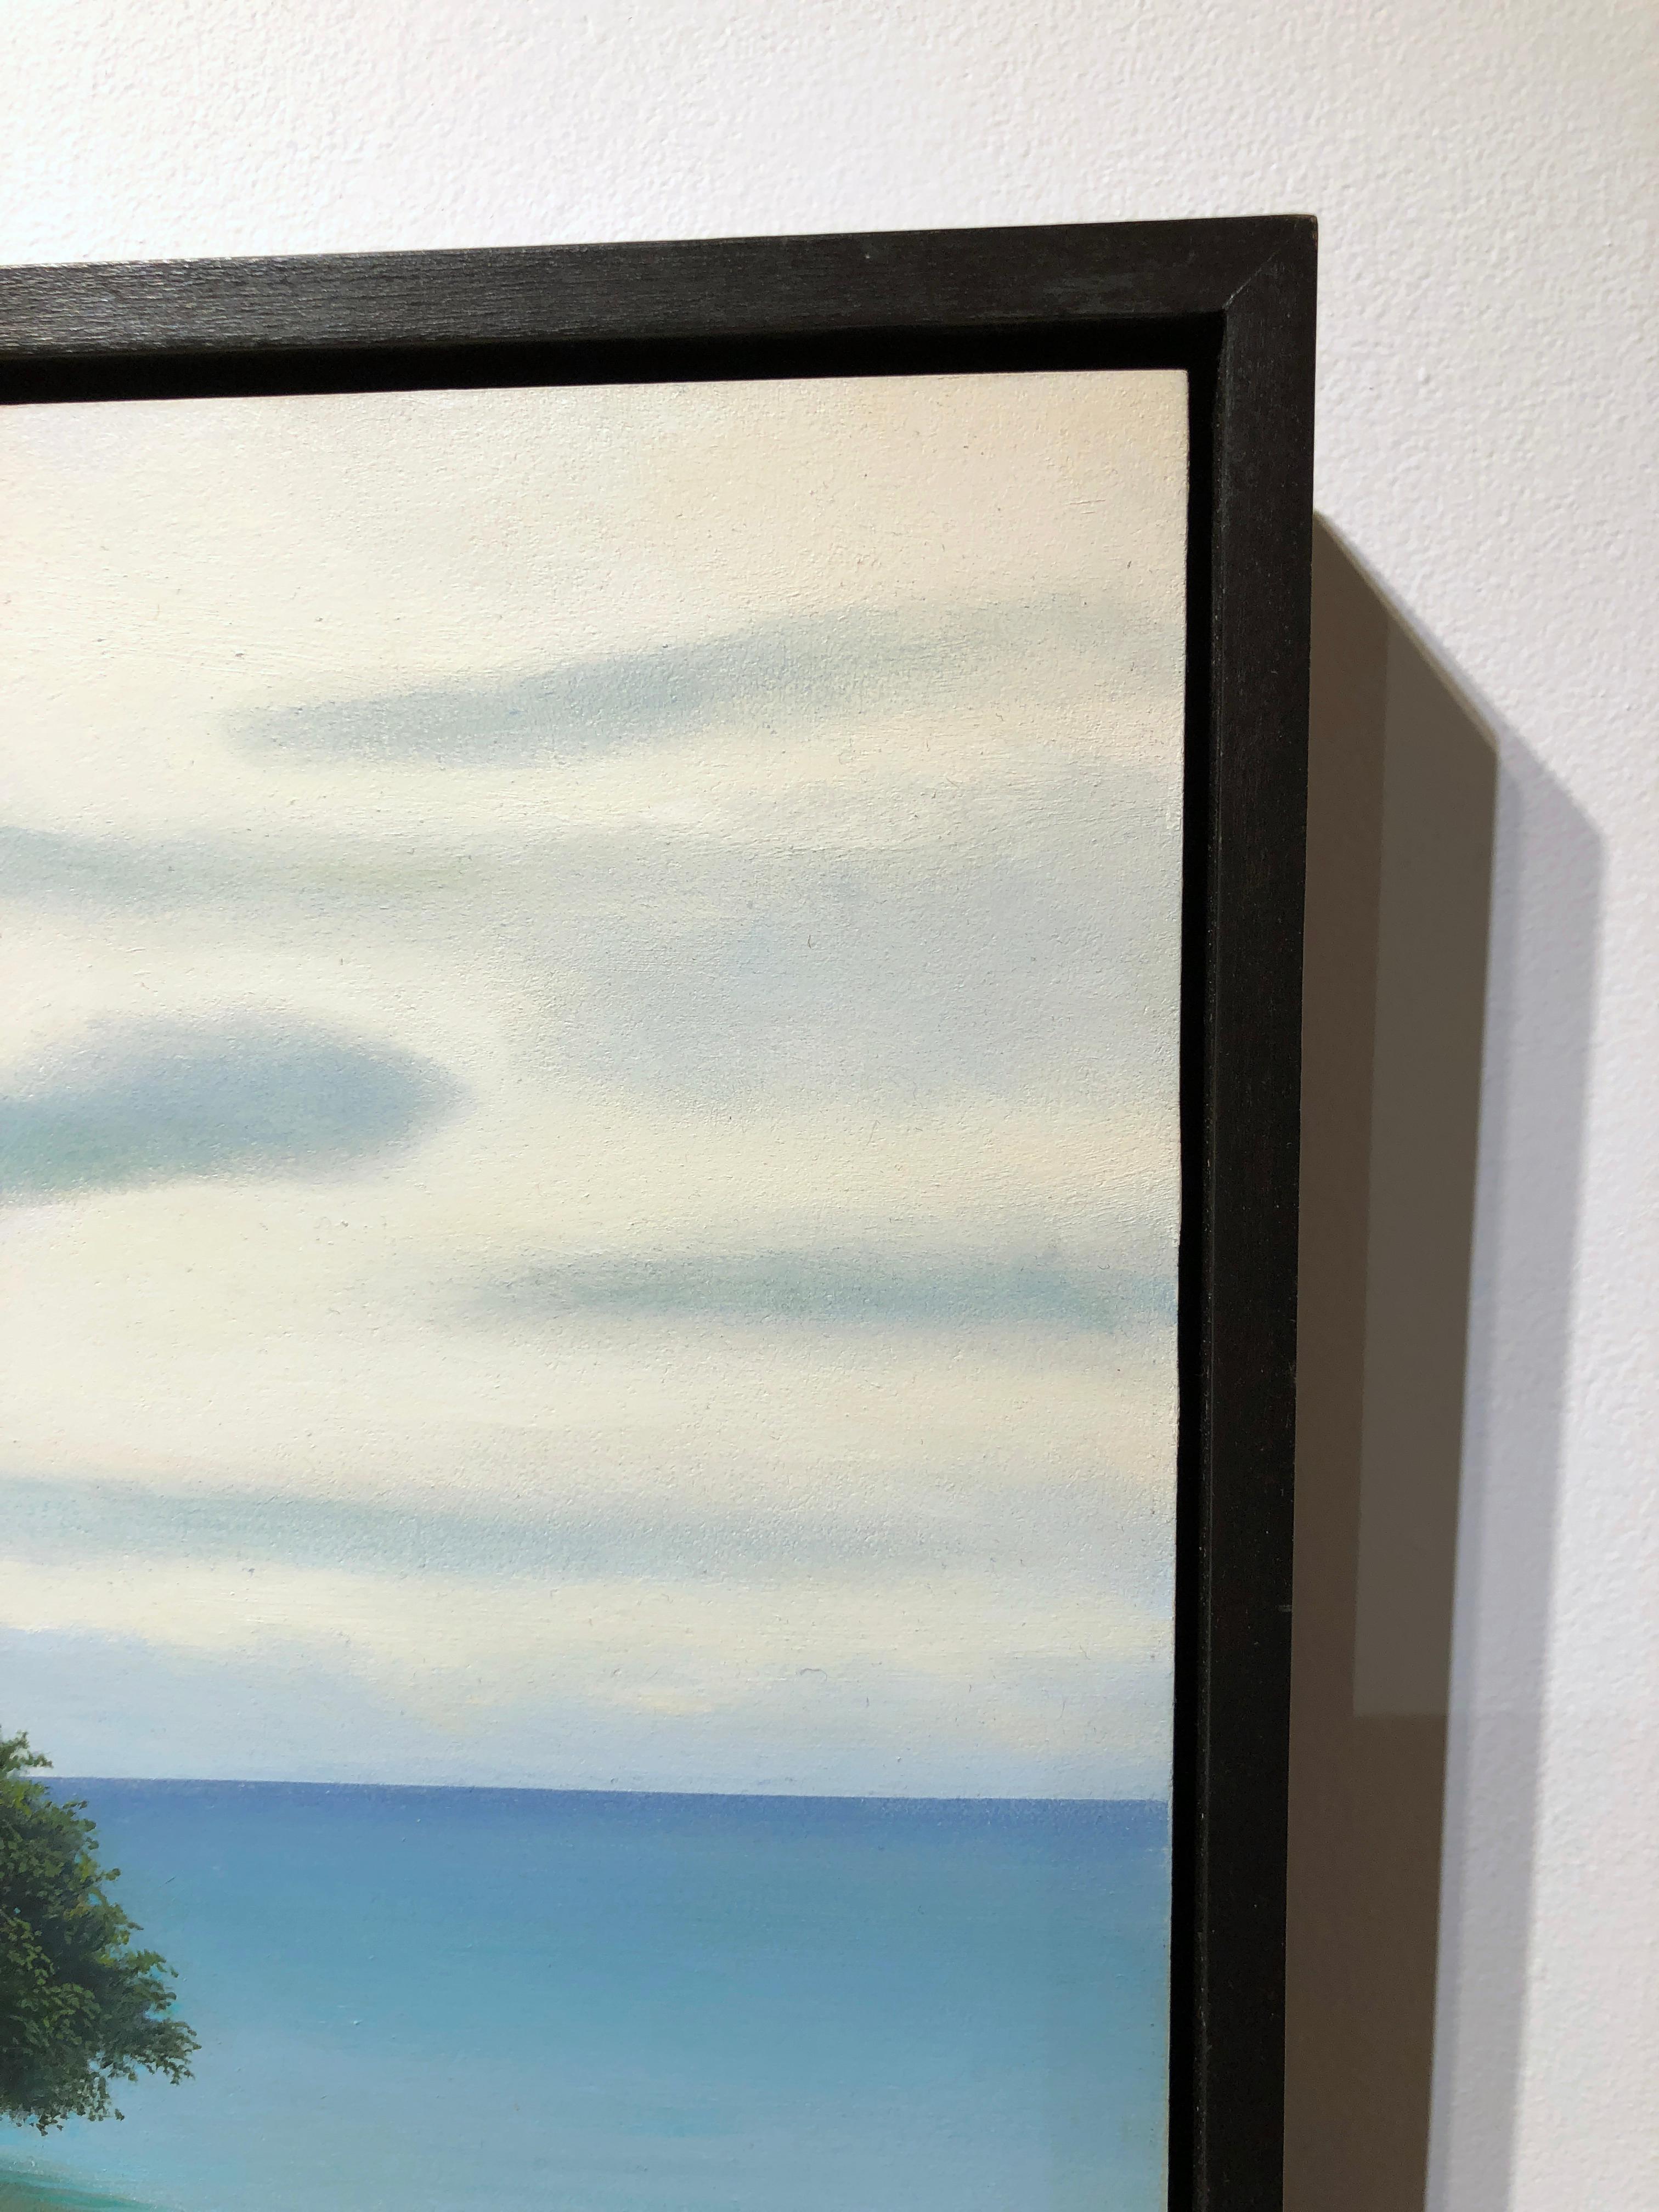 The Next Calm - Original Oil Painting of Serene Beach Scene with Aqua Blue Water 2